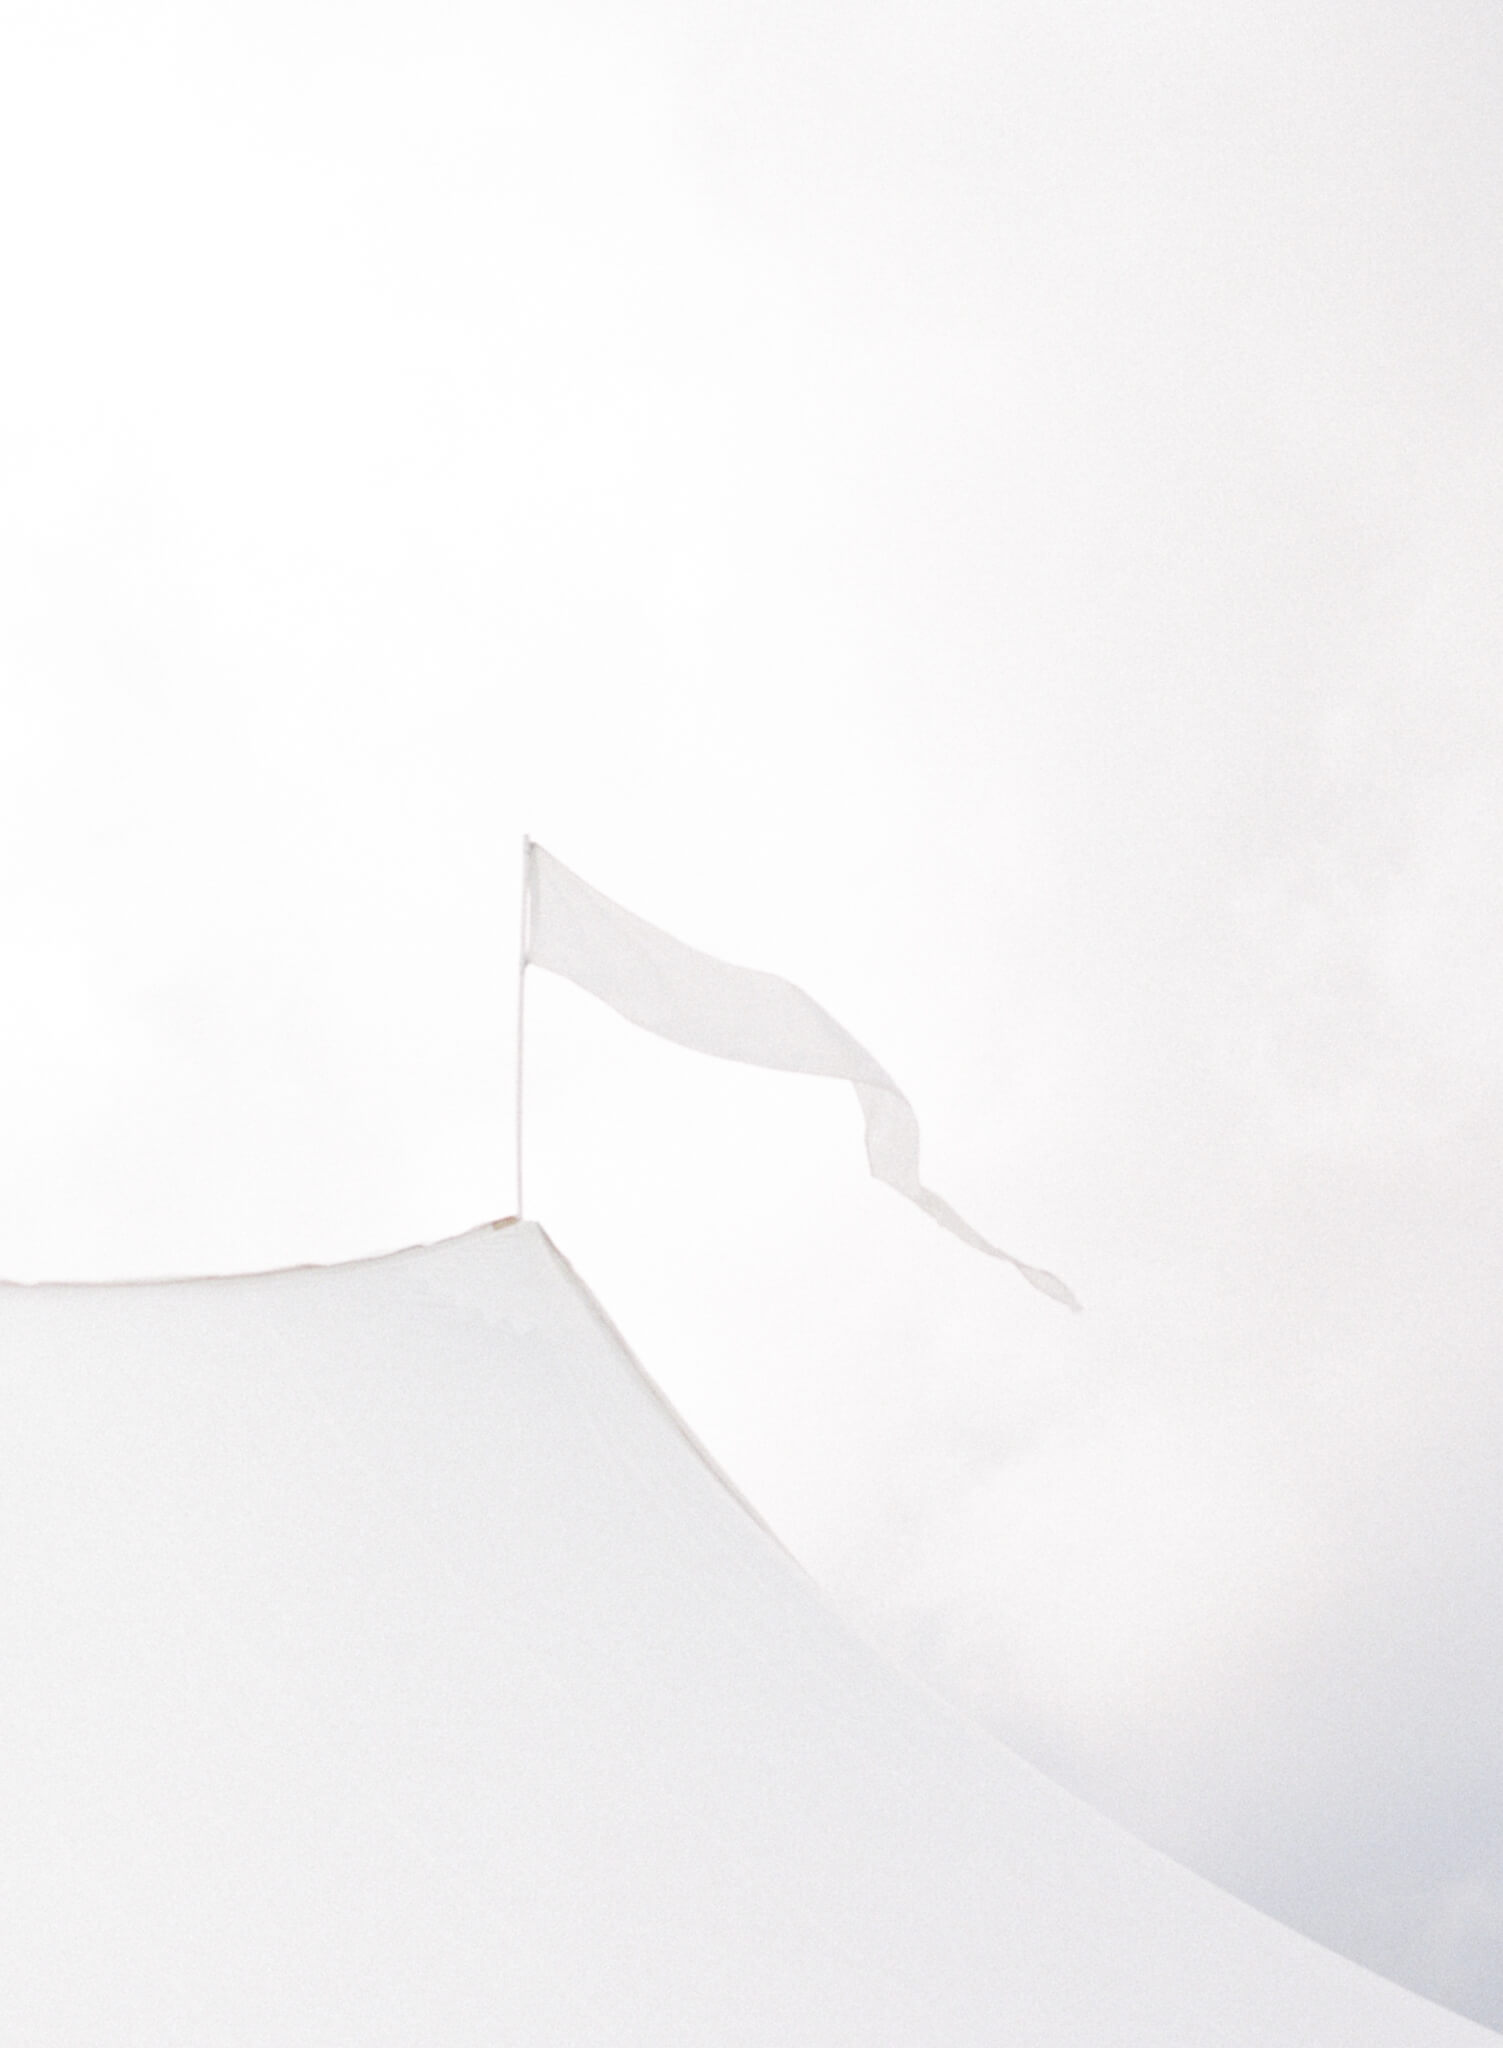 Closeup of a flag on a white sailcloth tent.